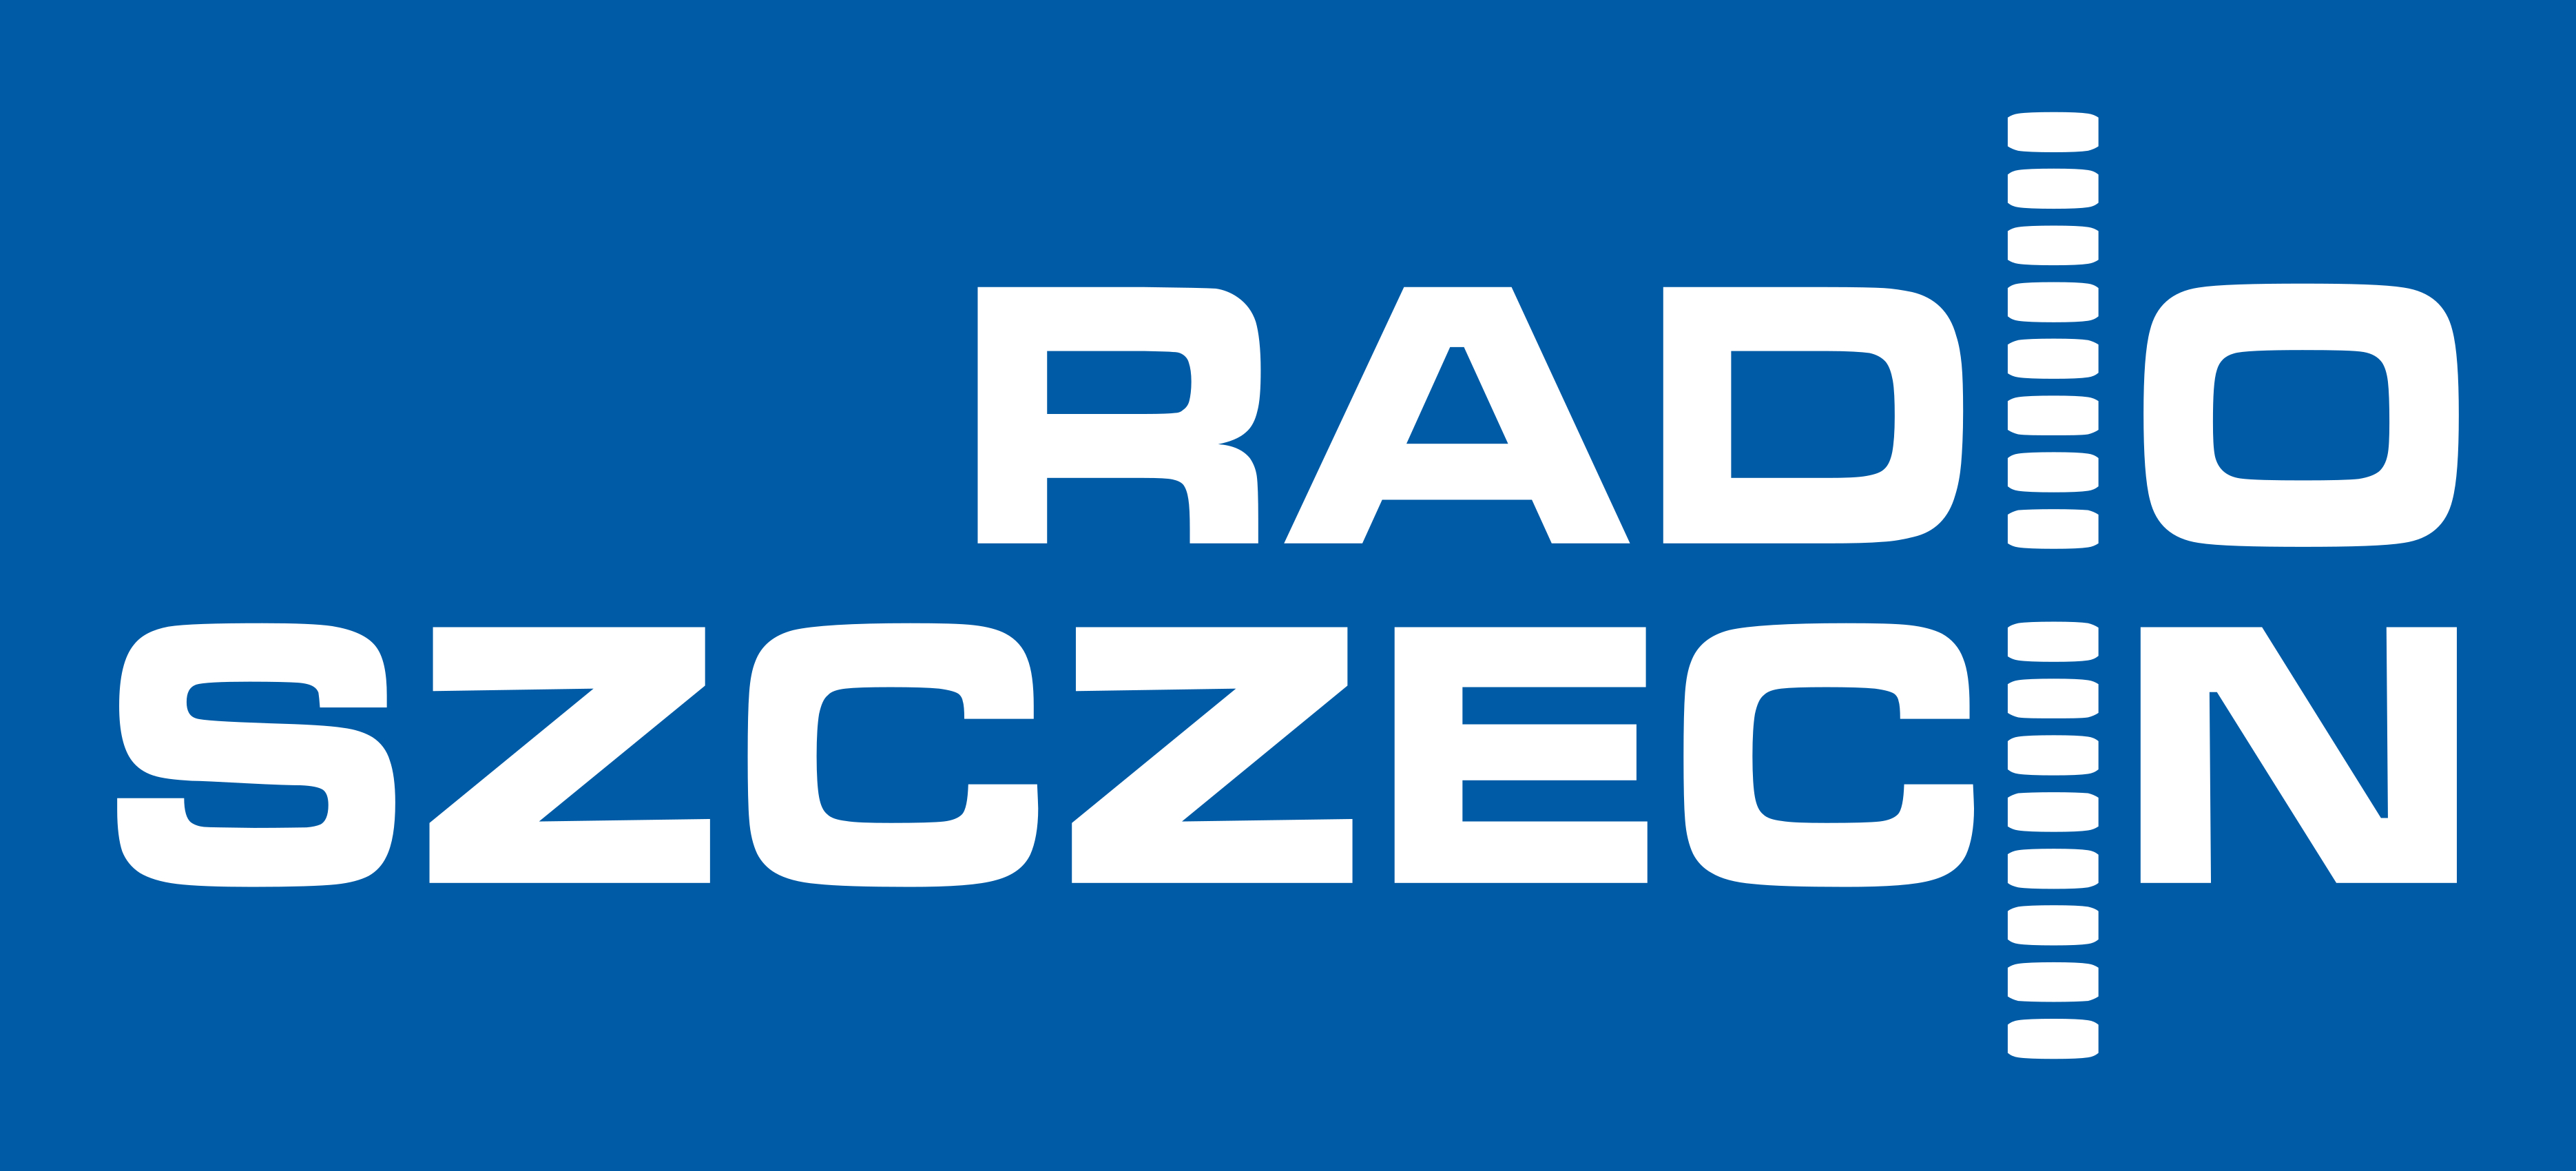 radio-szczecin